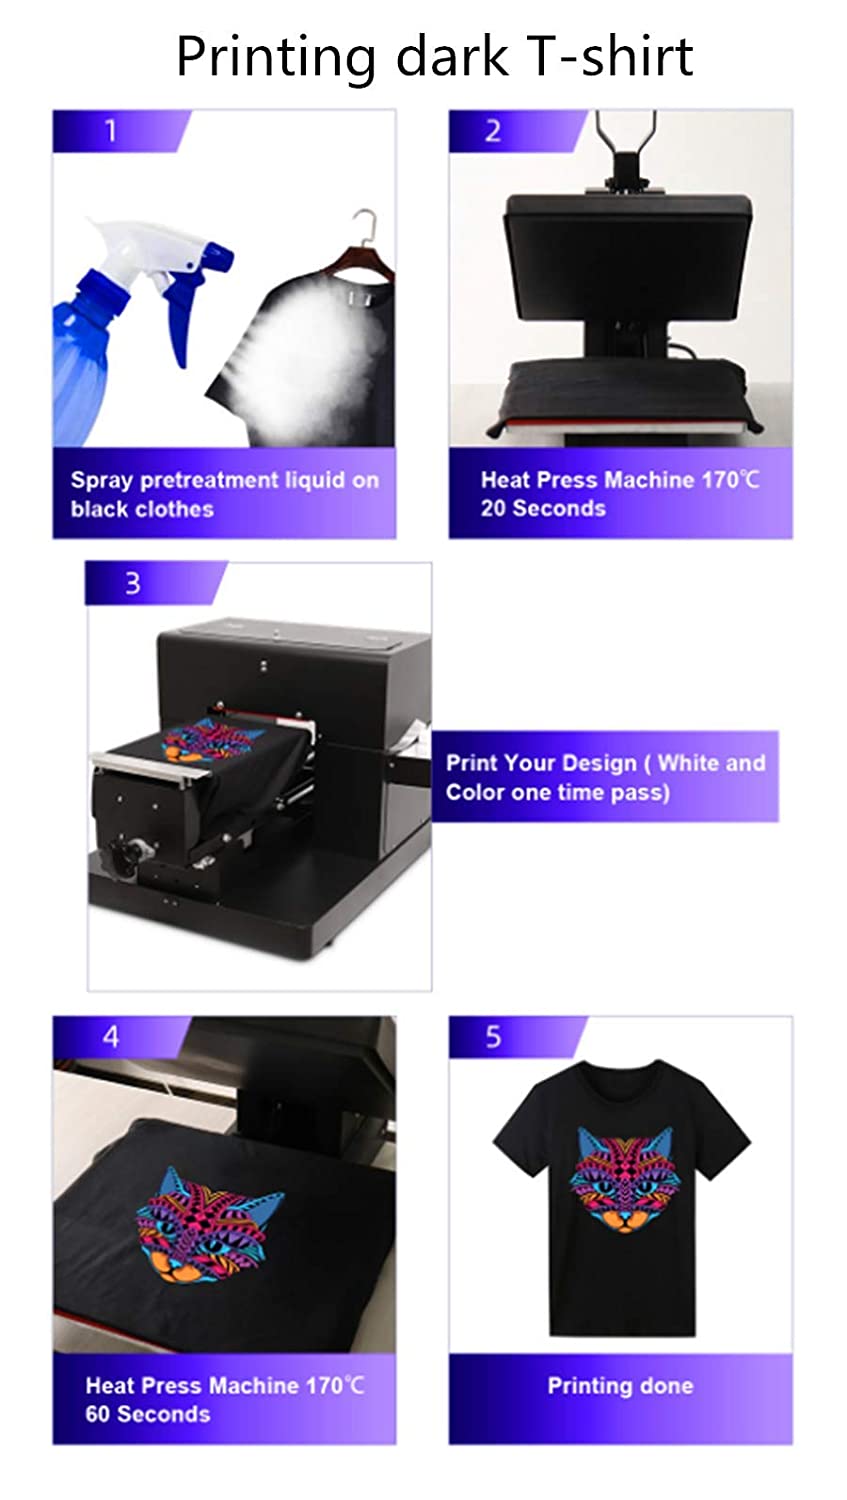 A3 1390 Textile Digital T Shirt Printer DTG Inkjet Printers